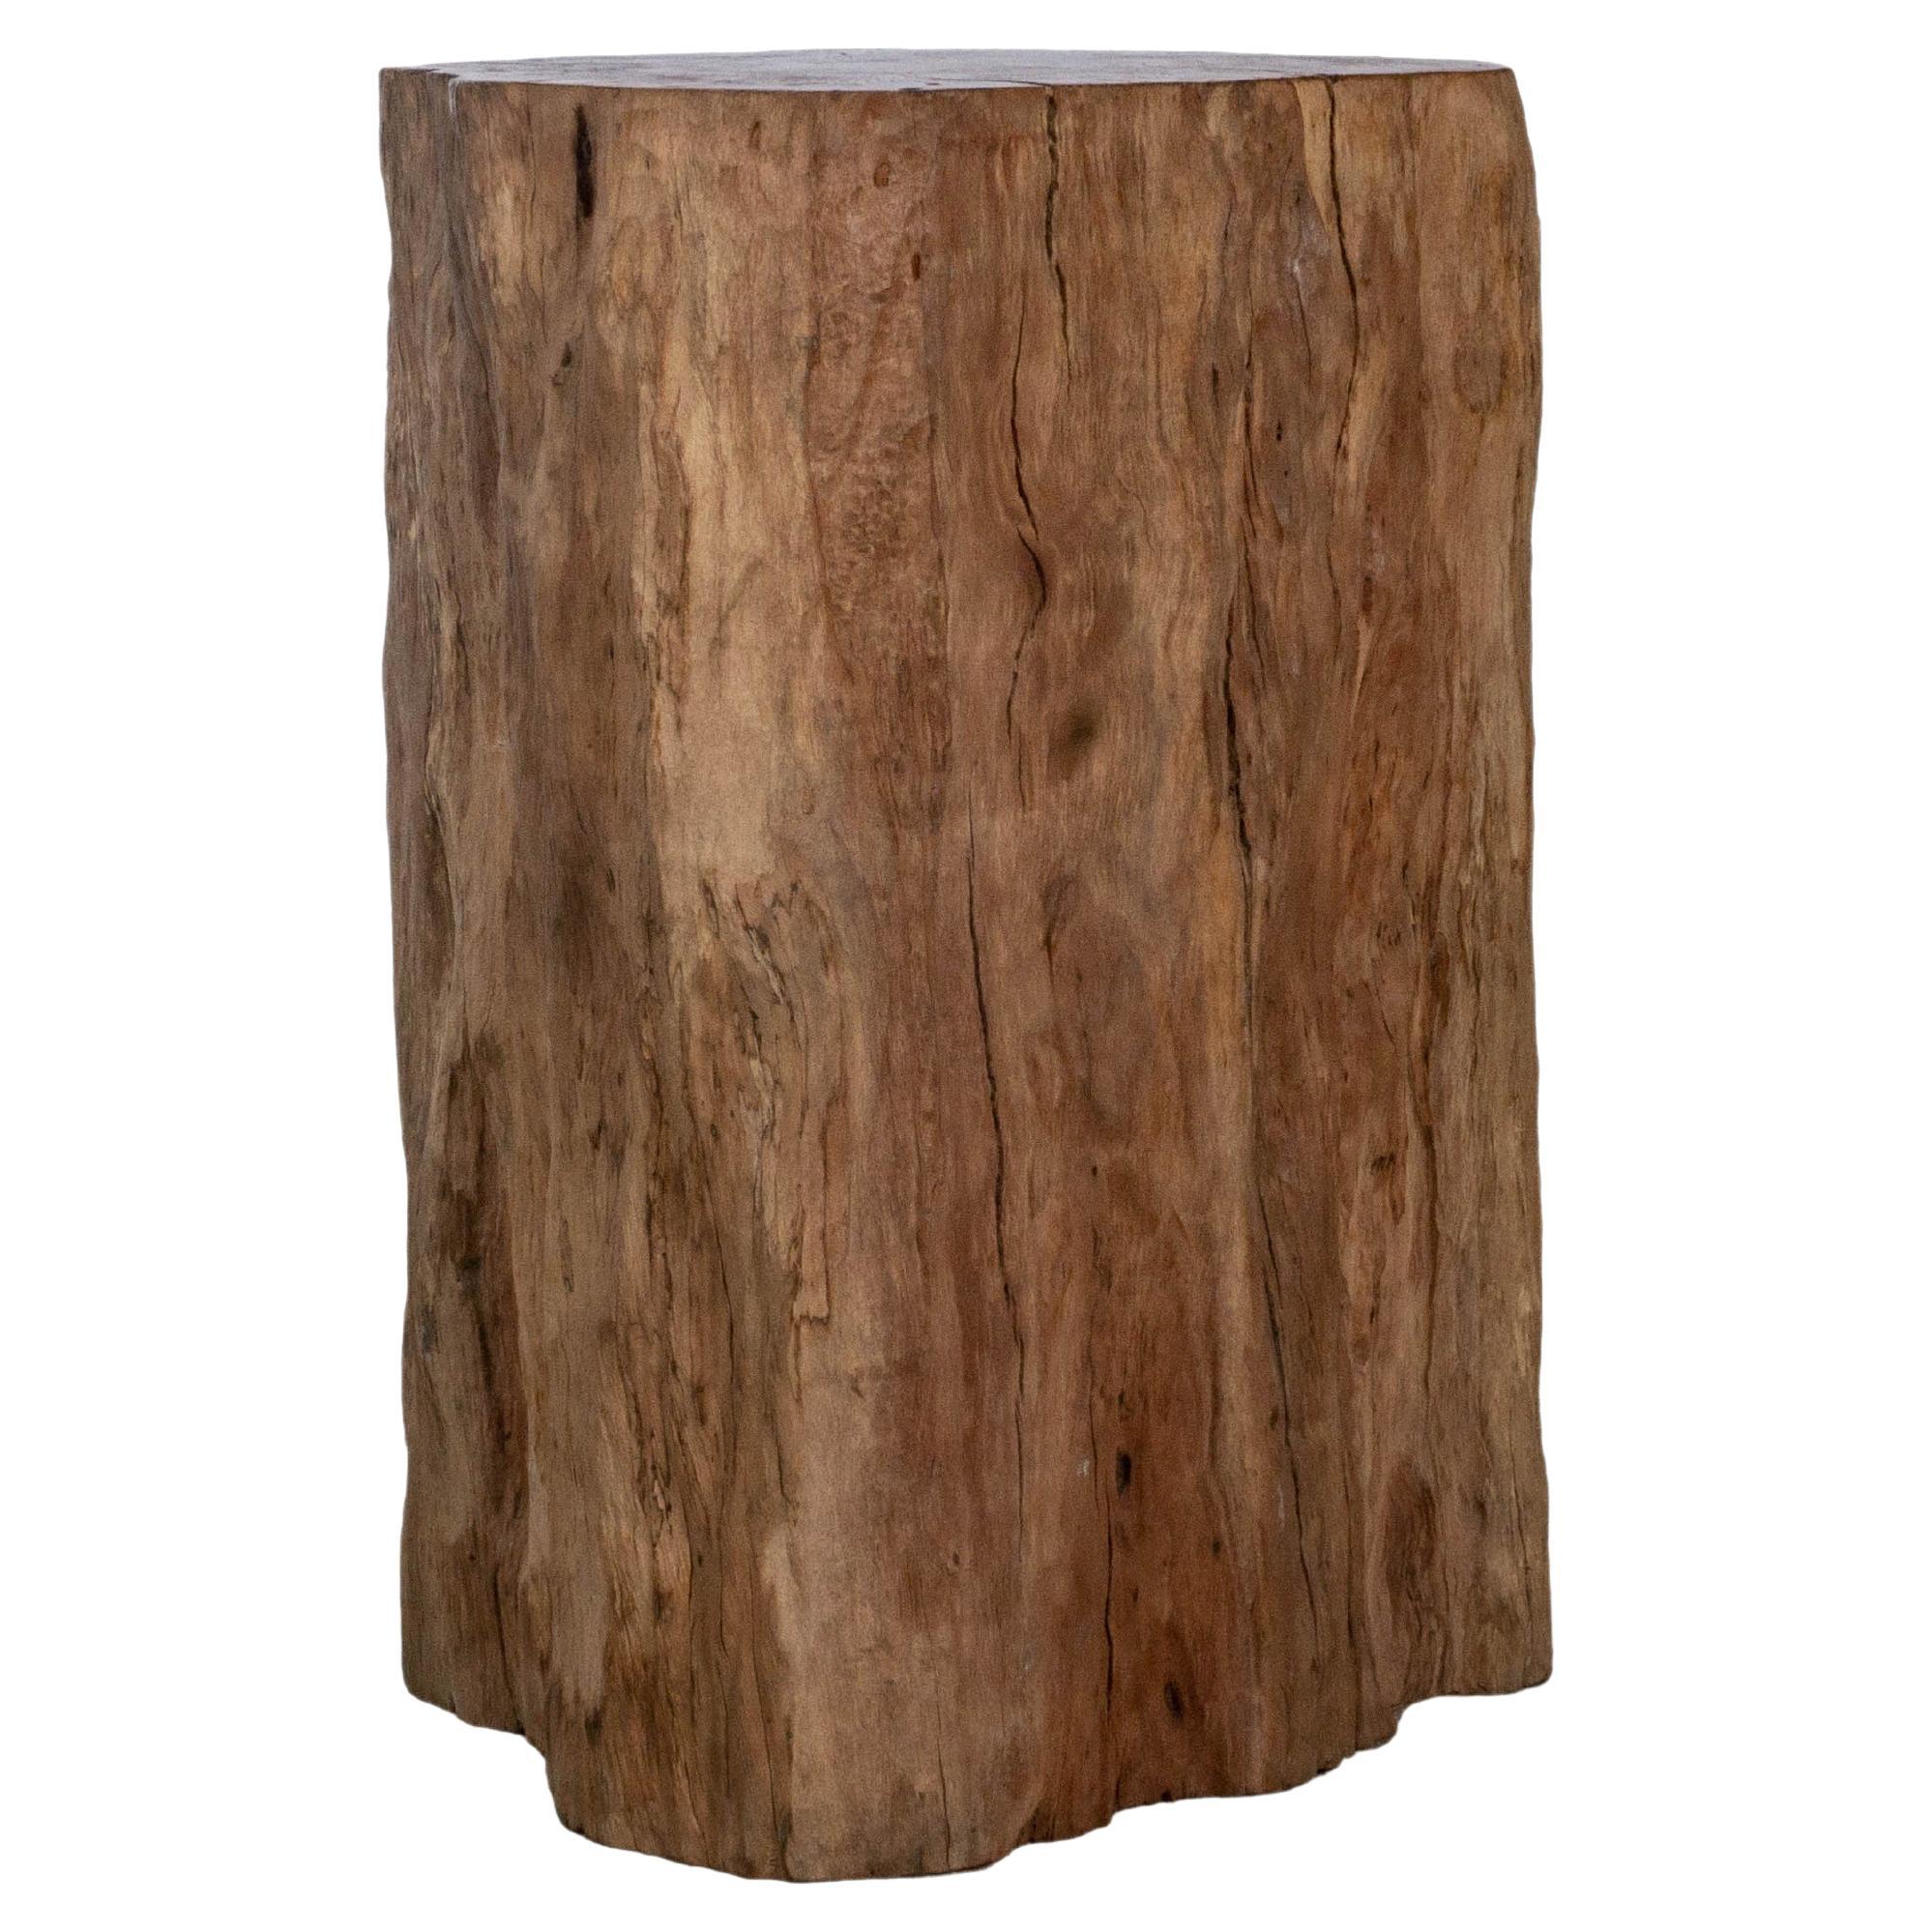 Lychee Holz Organic Form Beistelltisch 